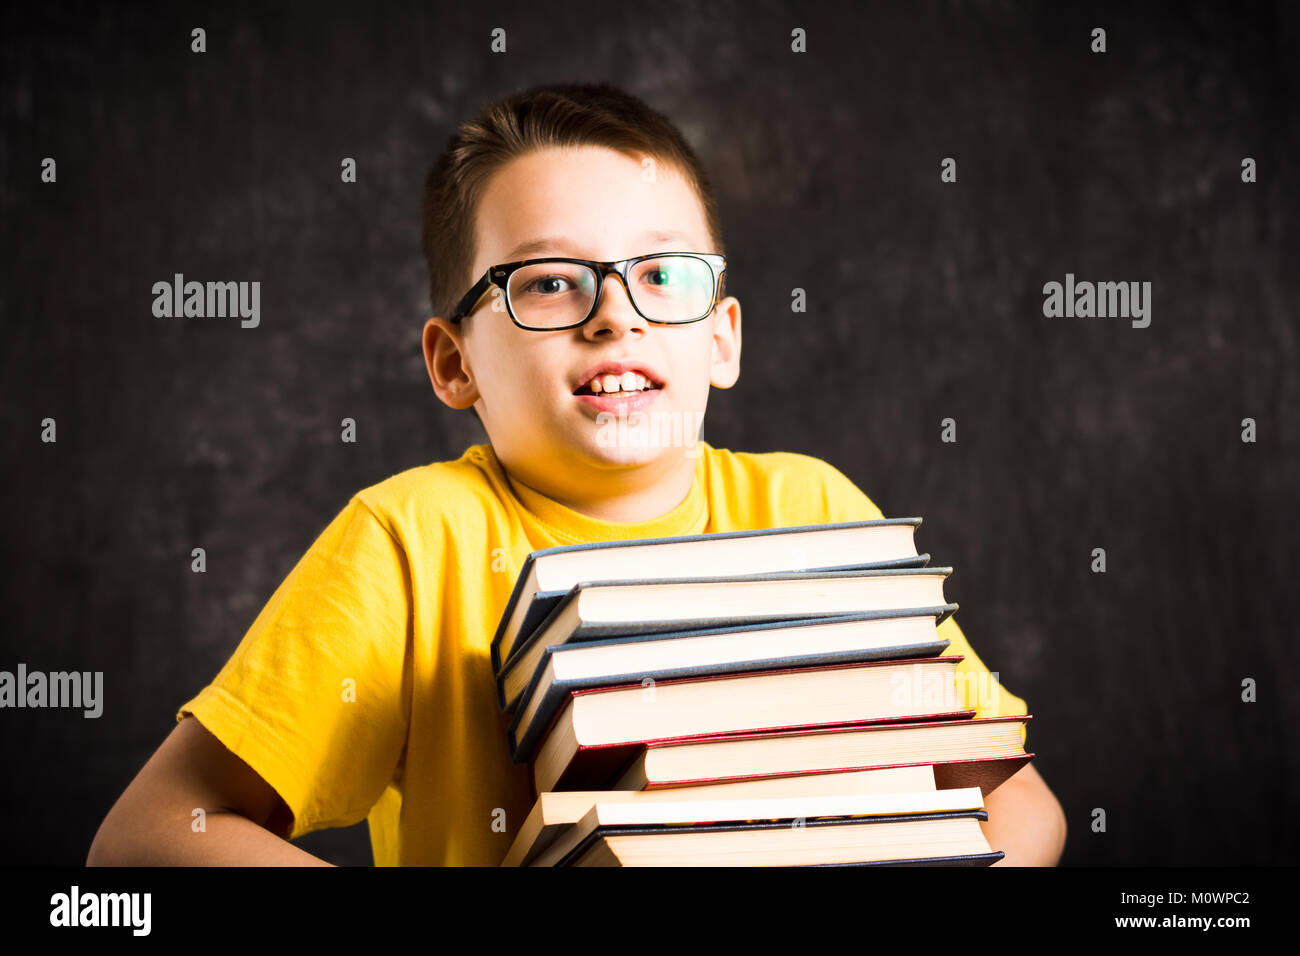 School kid lifting big pile of heavy books Stock Photo